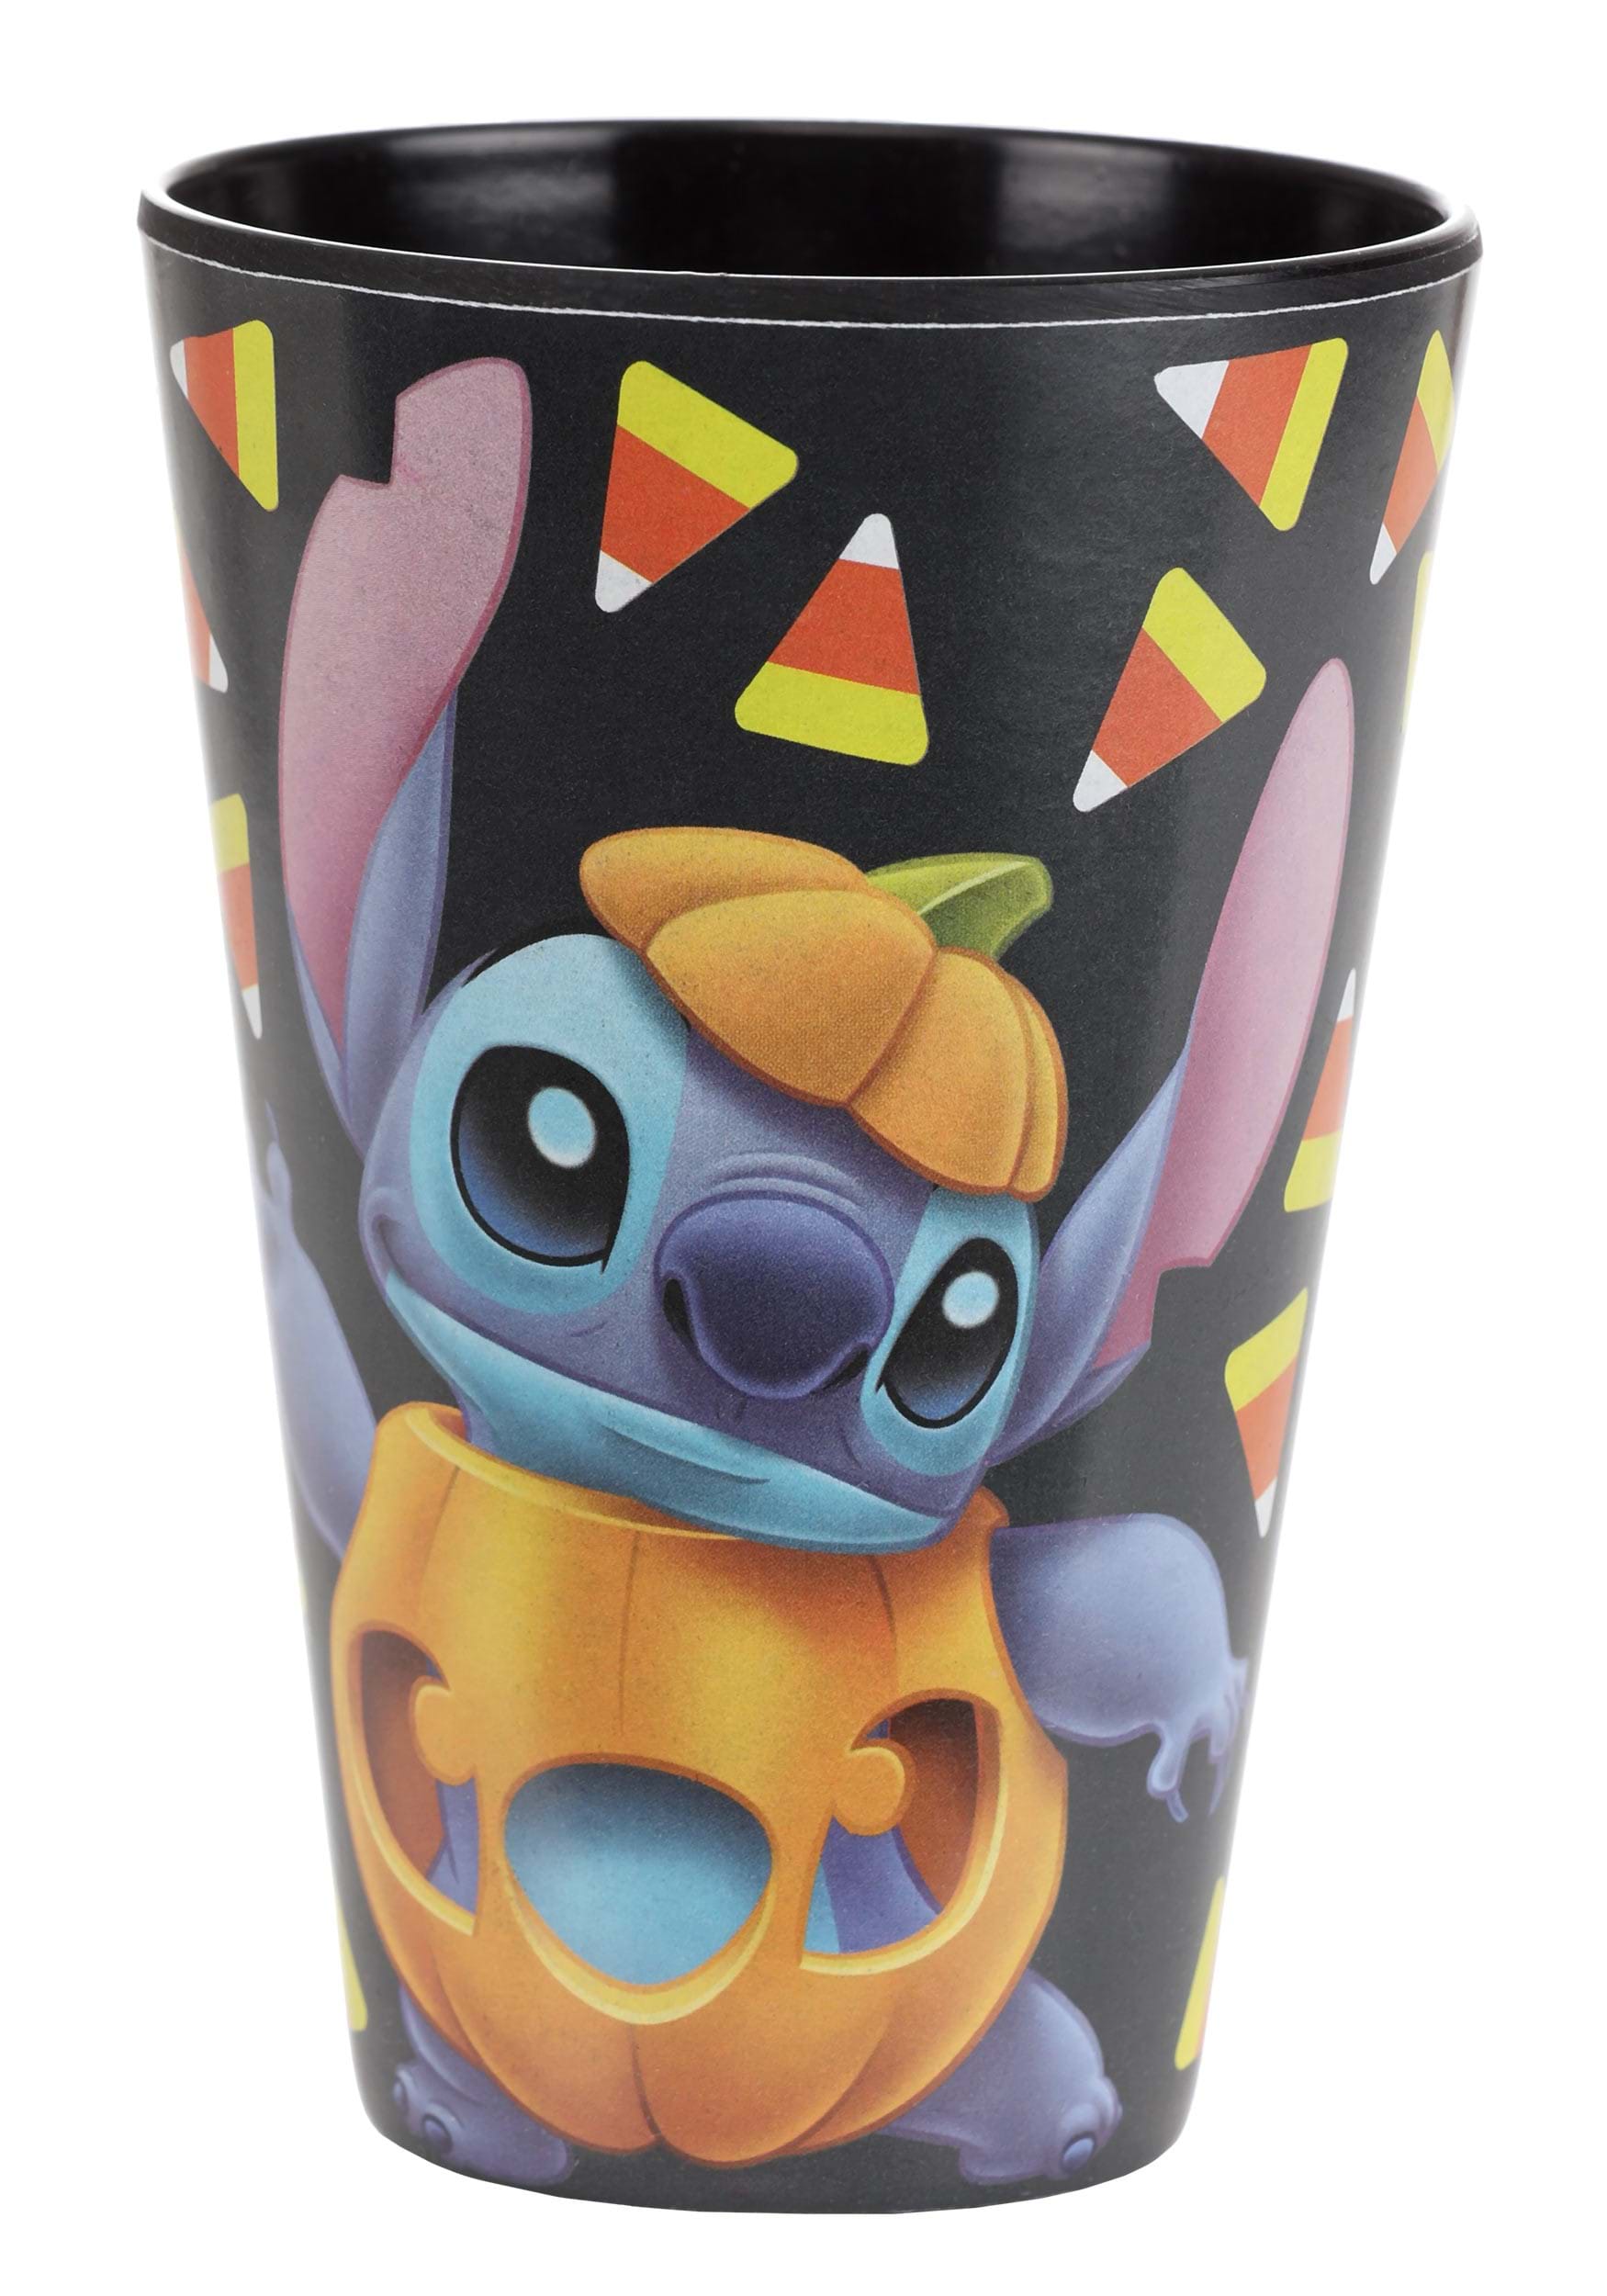 Lilo & Stitch Disney Collectible Cups Plastic Drinking Glasses 4 Set 16oz  New